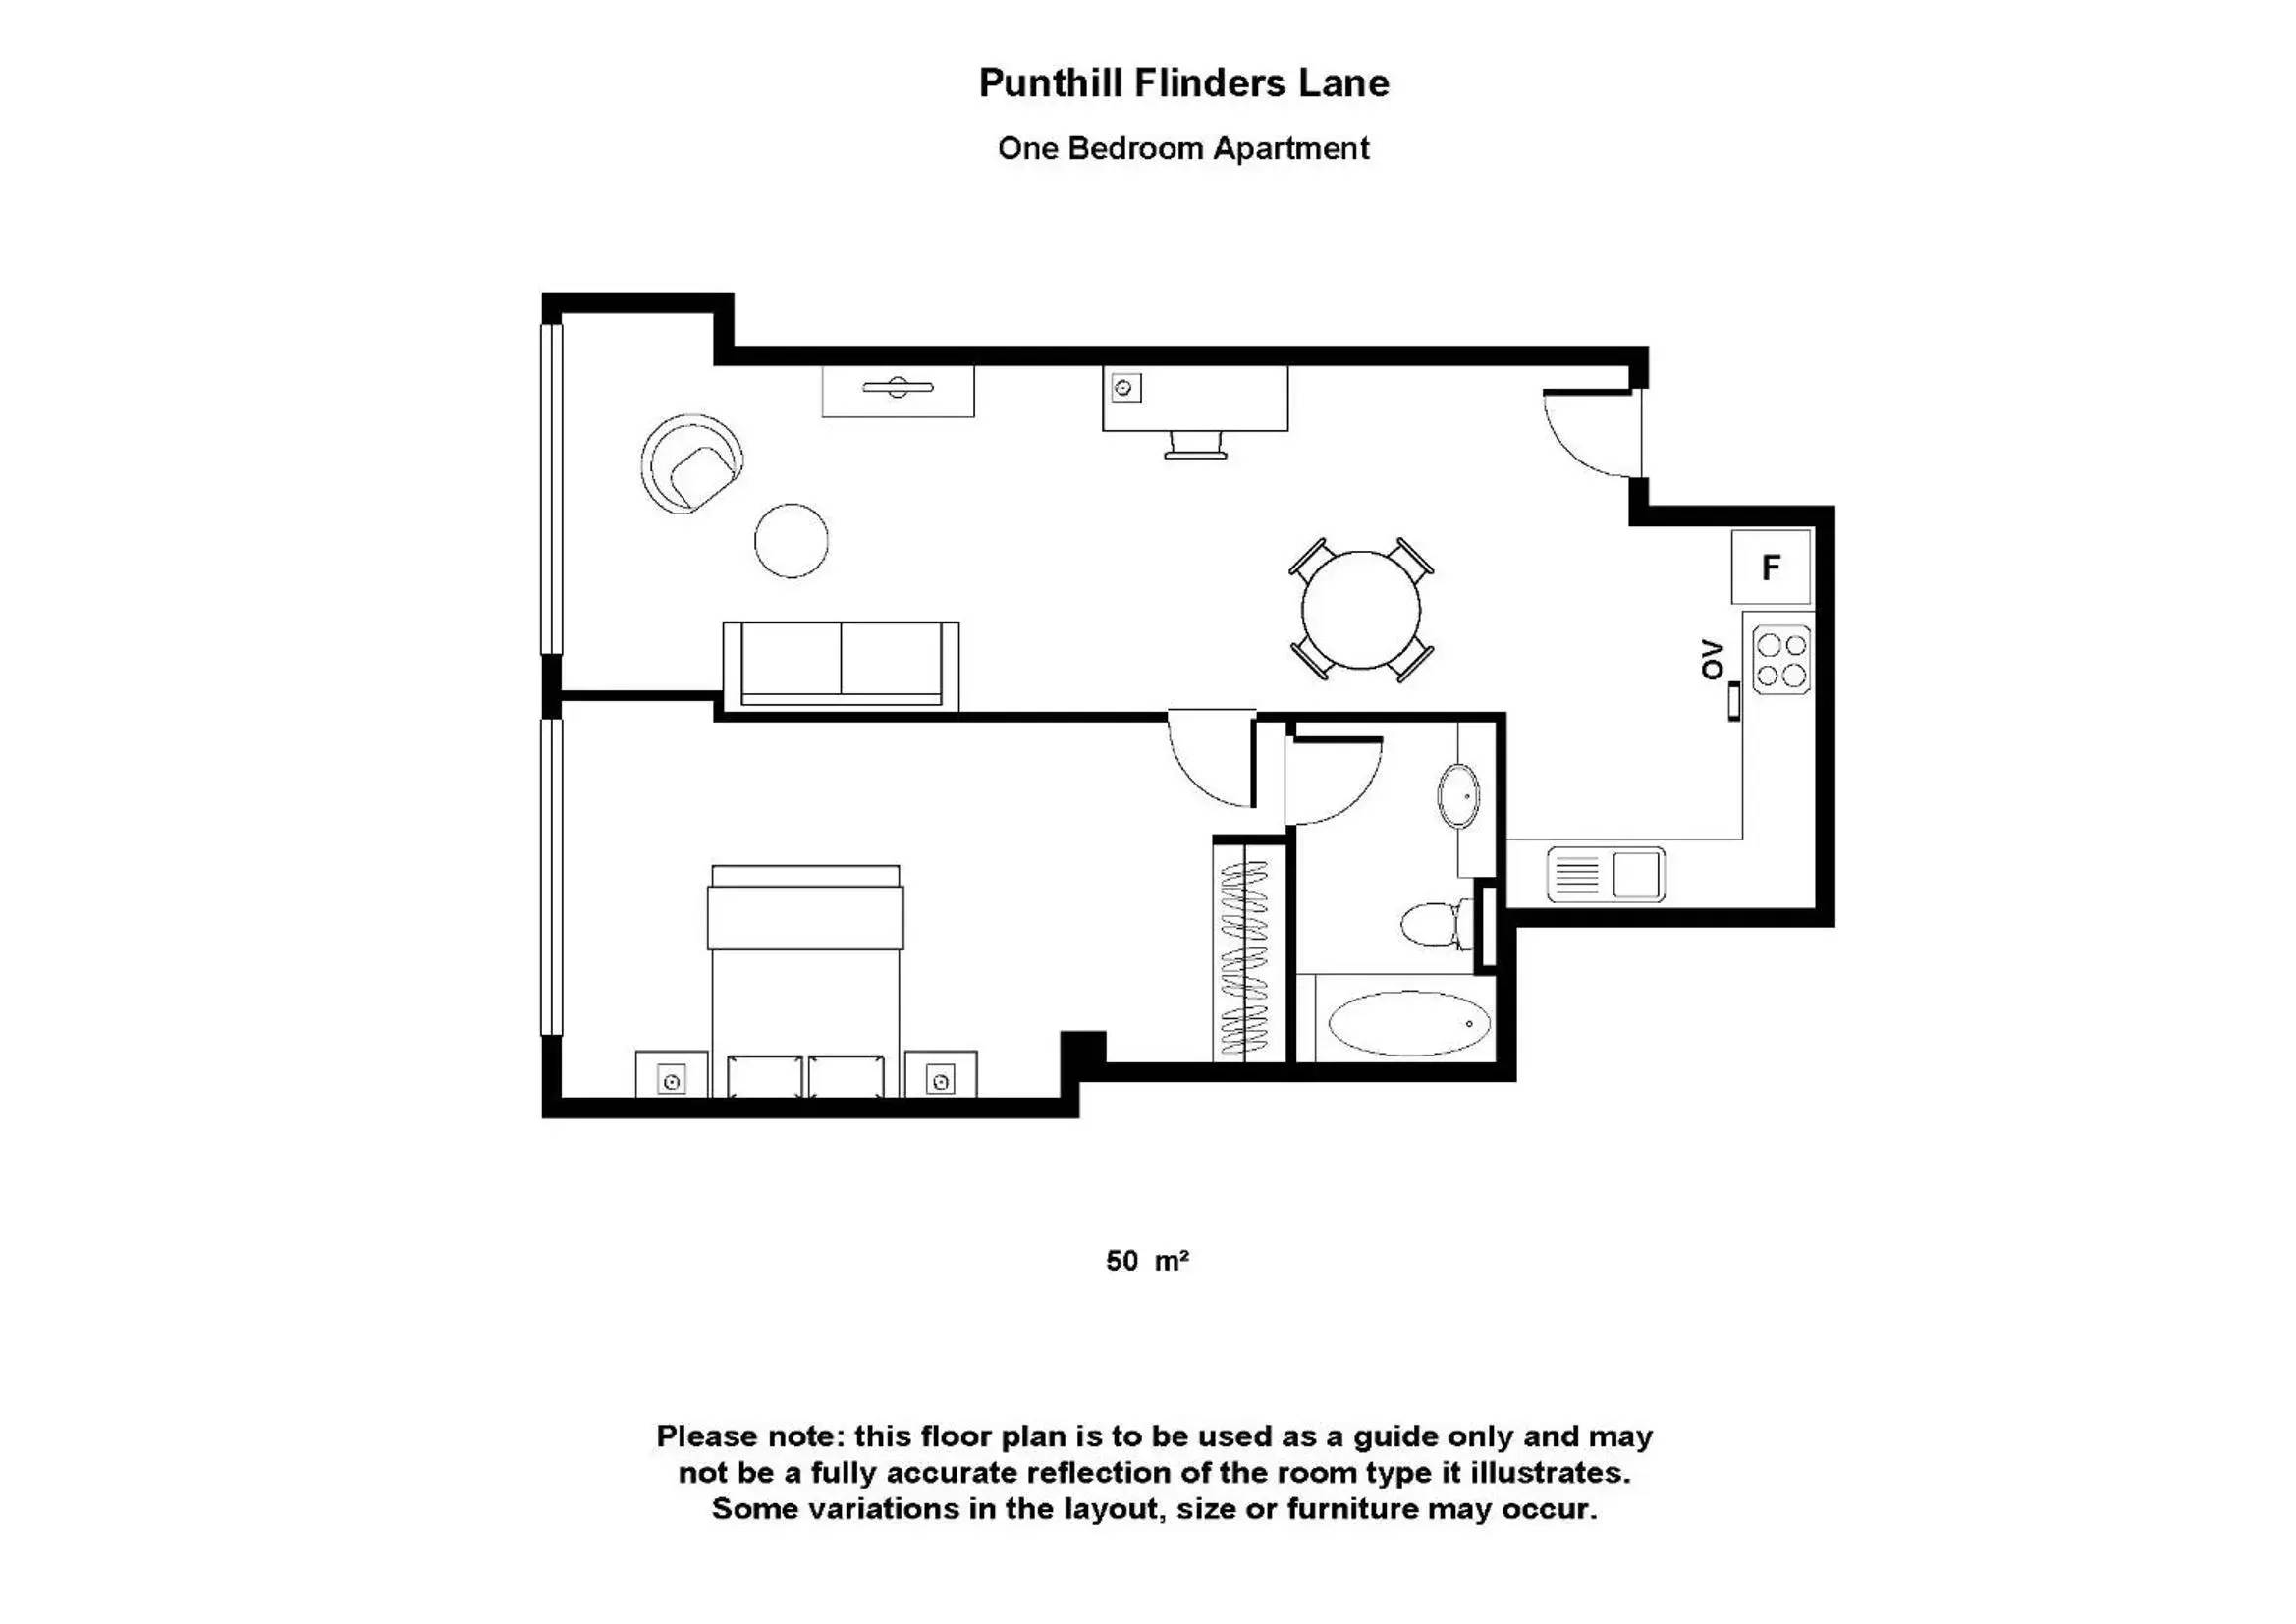 Floor Plan in Punthill Apartment Hotel - Flinders Lane